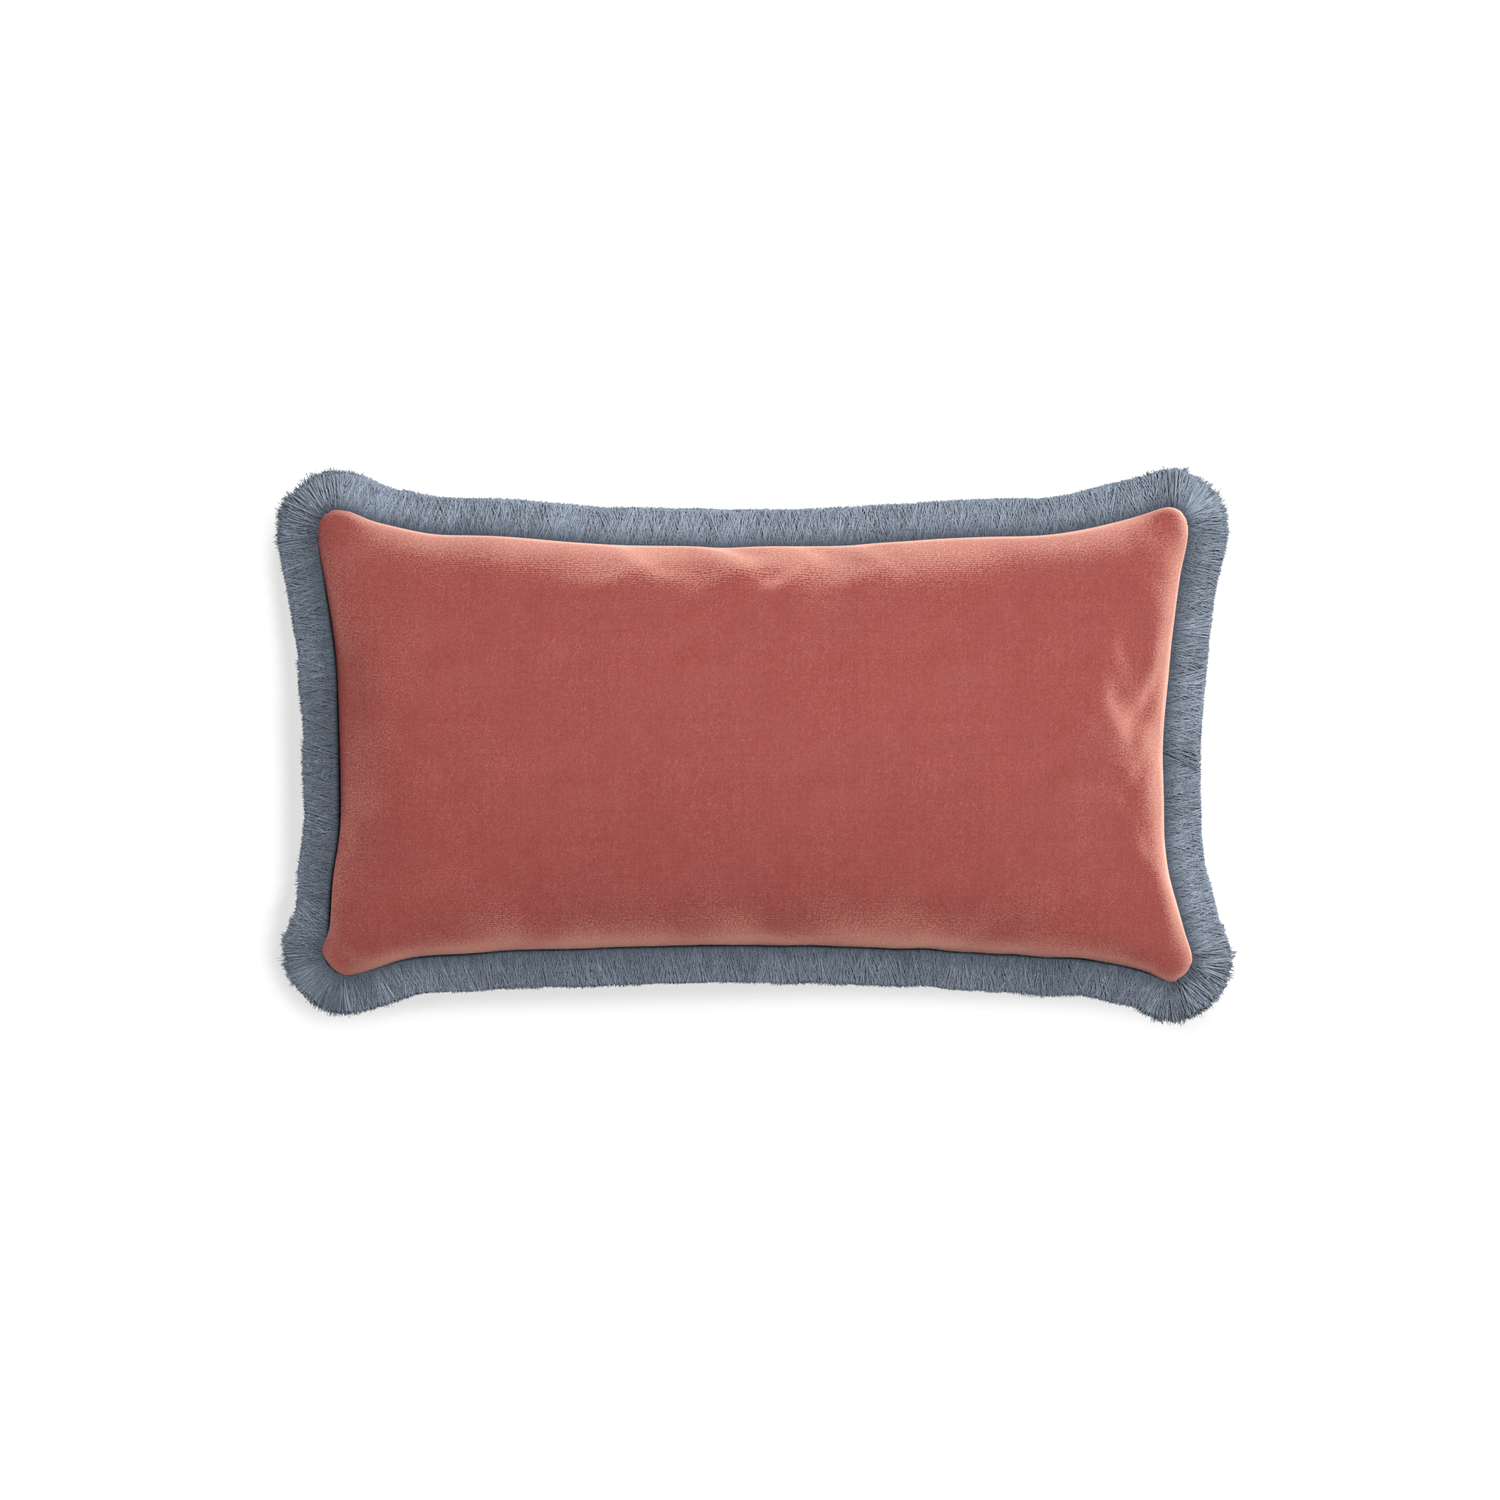 rectangle coral velvet pillow with sky blue fringe